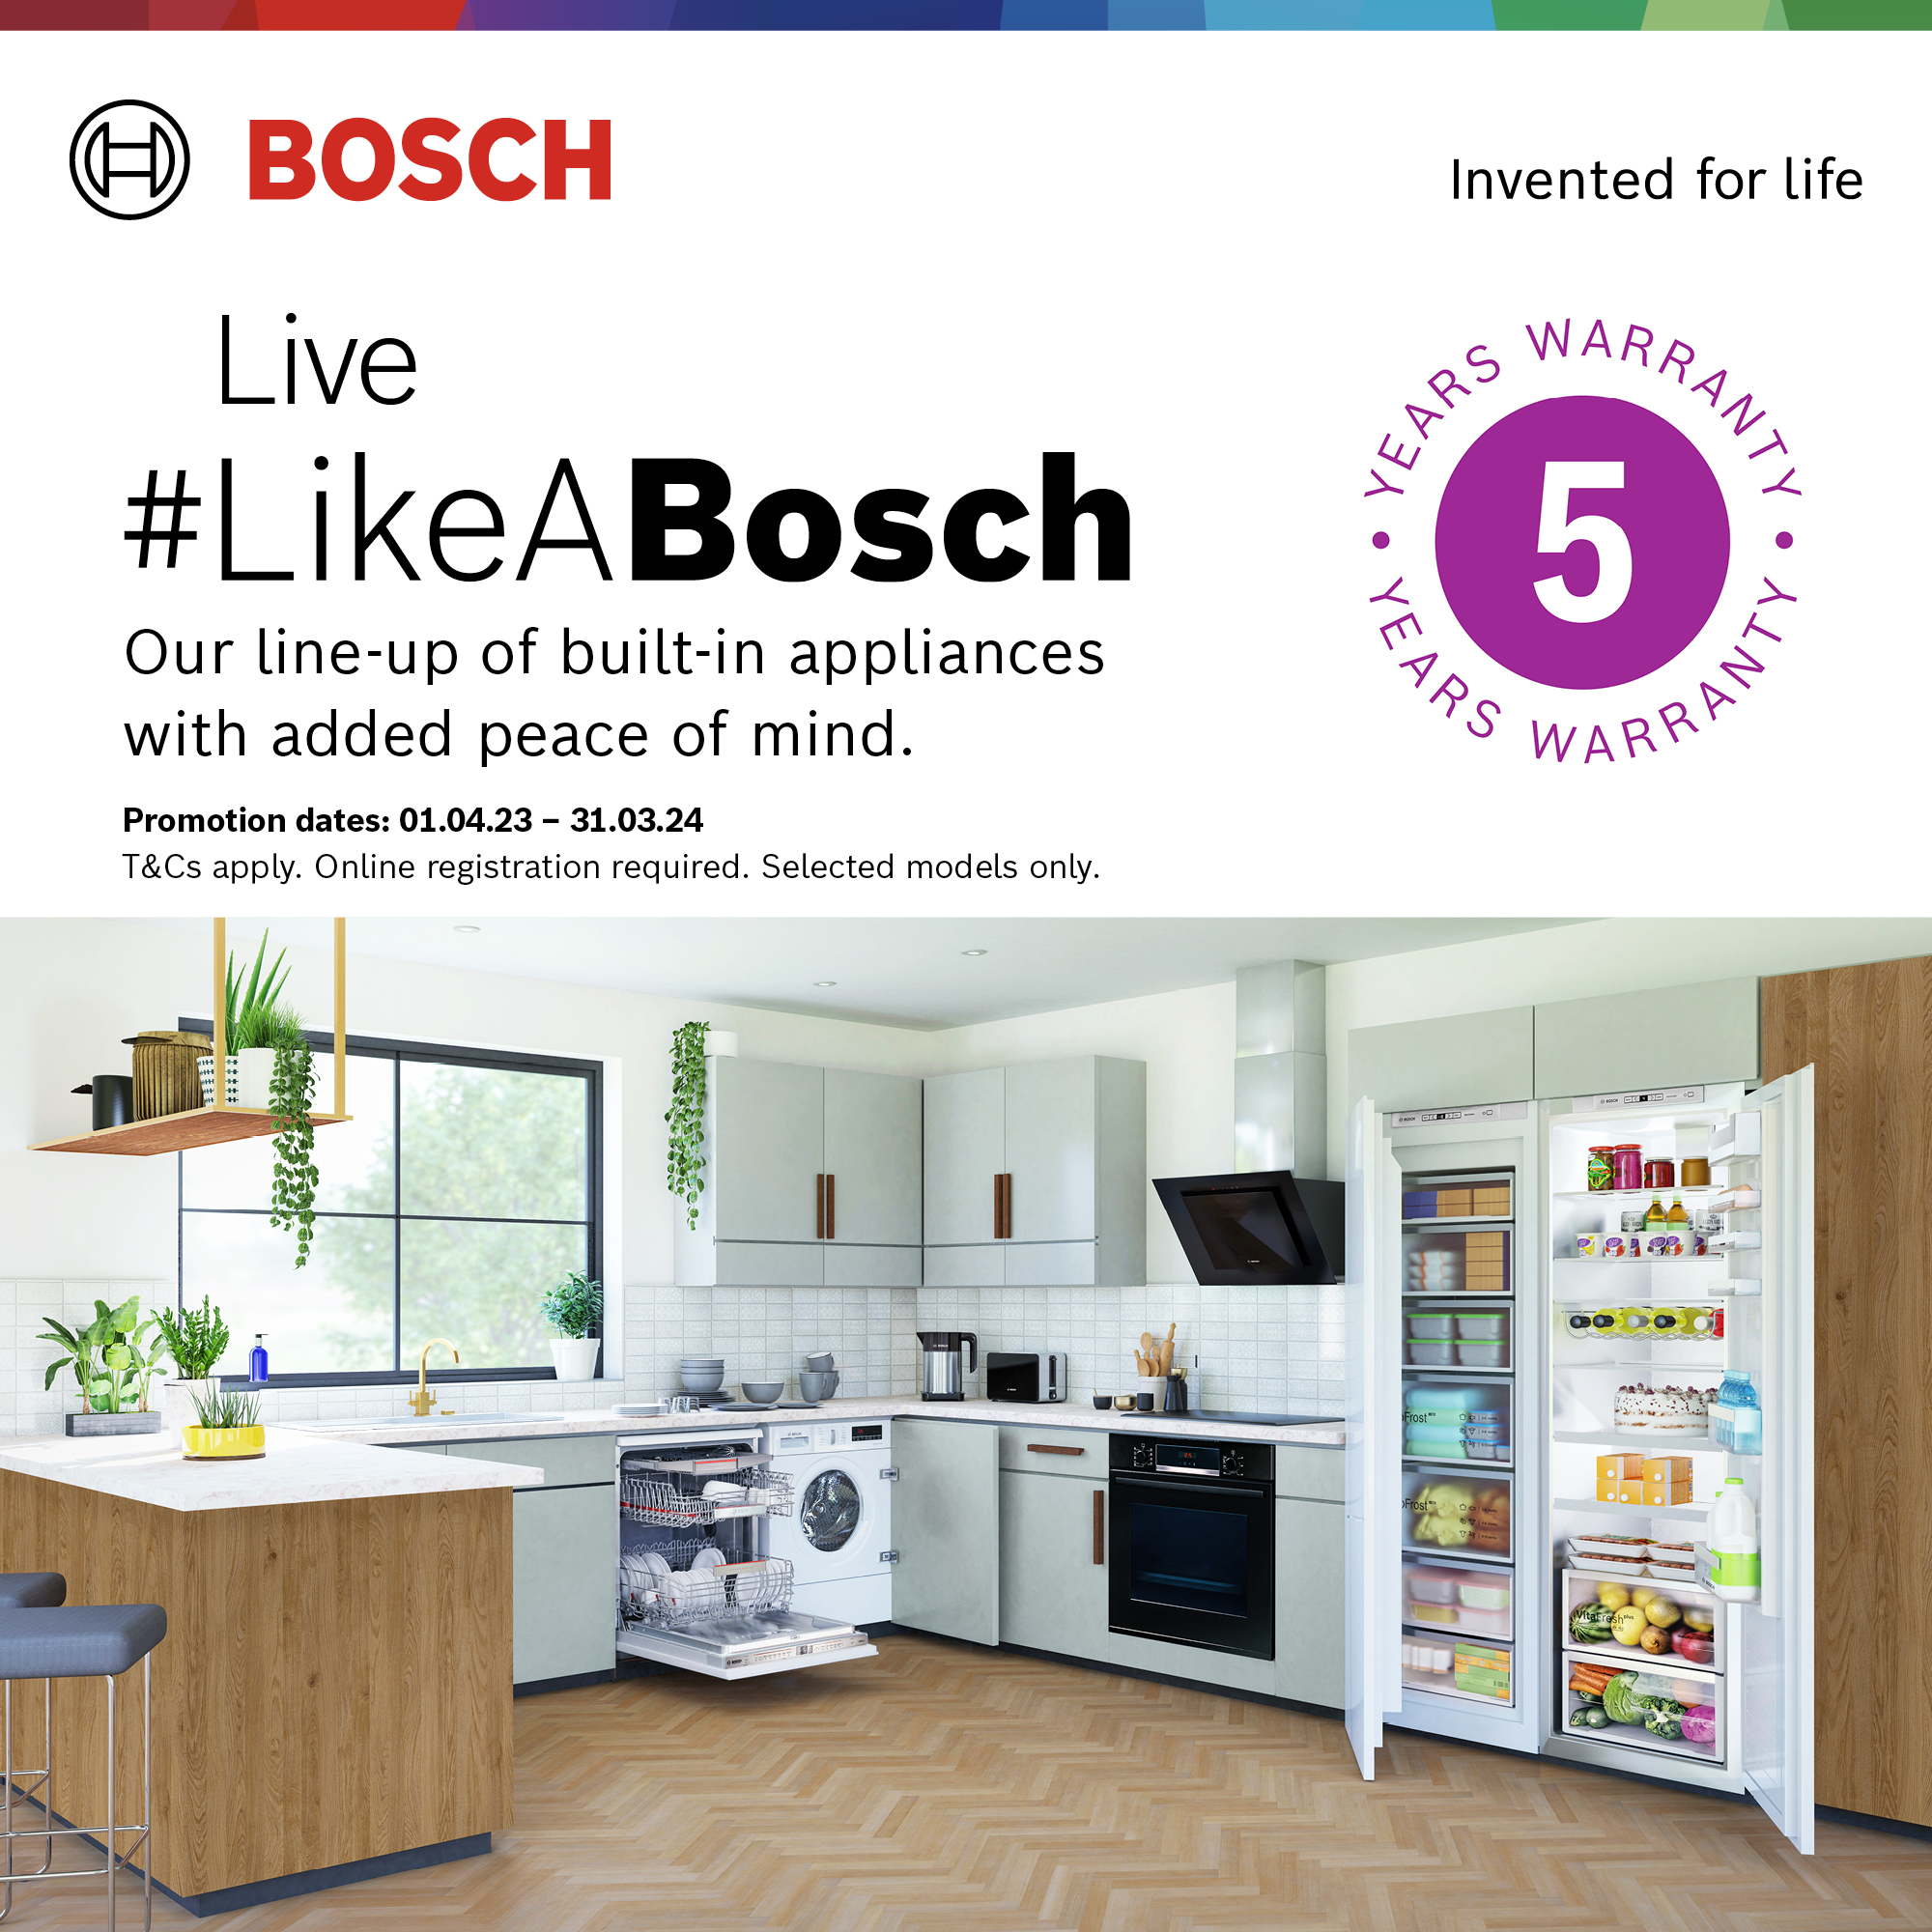 Bosch 5 Year warranty Ends 31-3-24